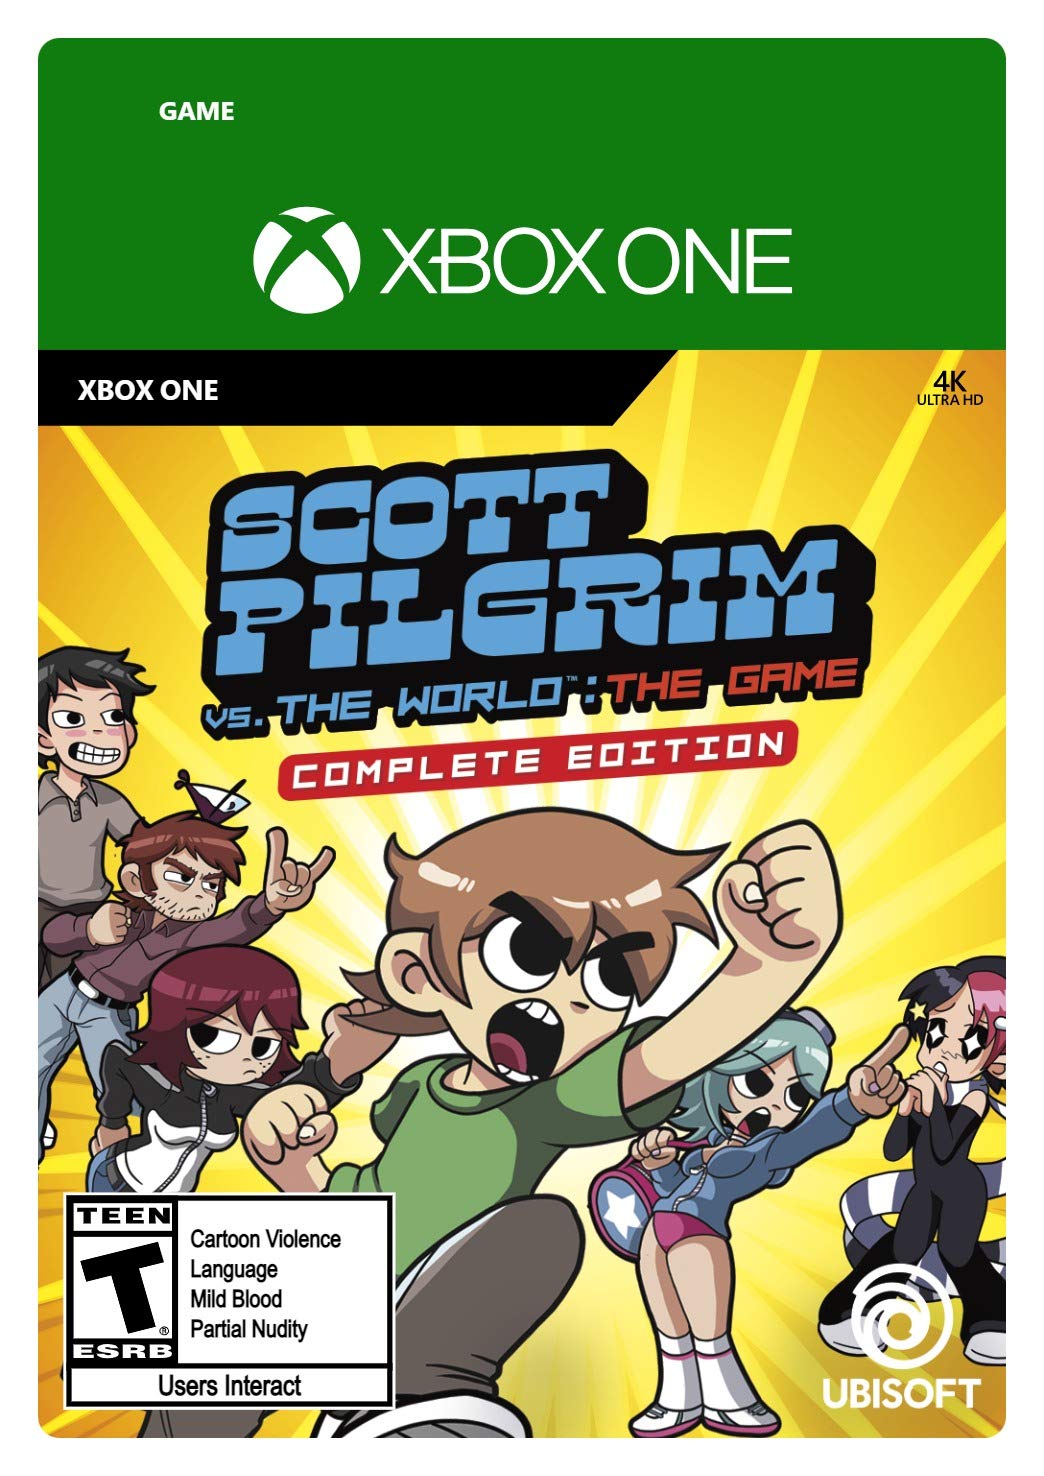 Scott Pilgrim vs. The World The Game Complete Edition - Xbox One [Digital Code] $4.49